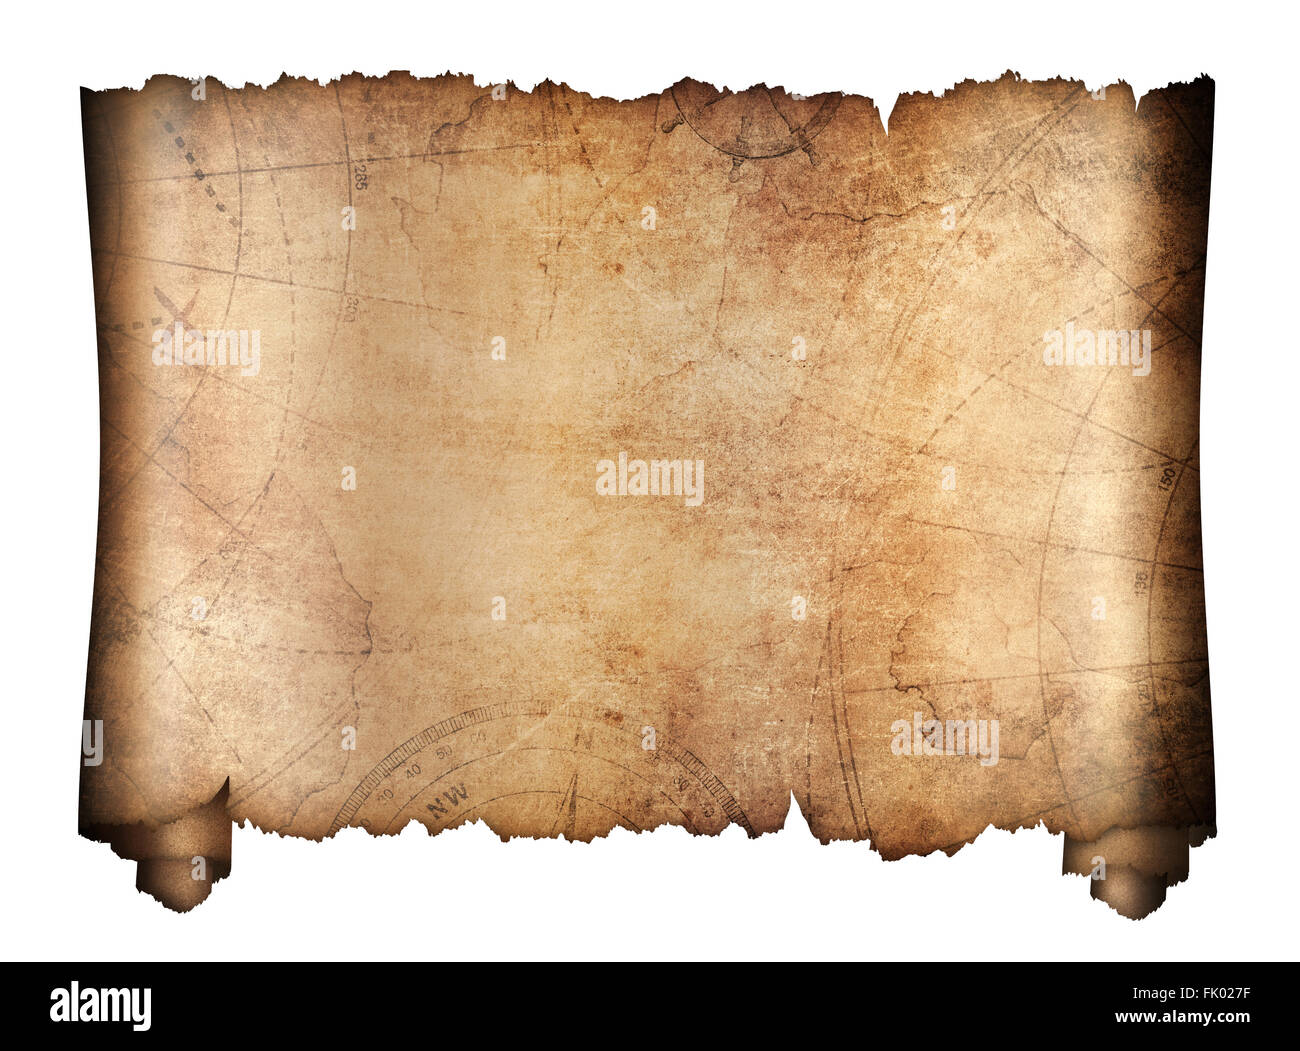 Pirate Blank Map With Treasure Stockfotos und -bilder Kaufen - Alamy Pertaining To Blank Pirate Map Template